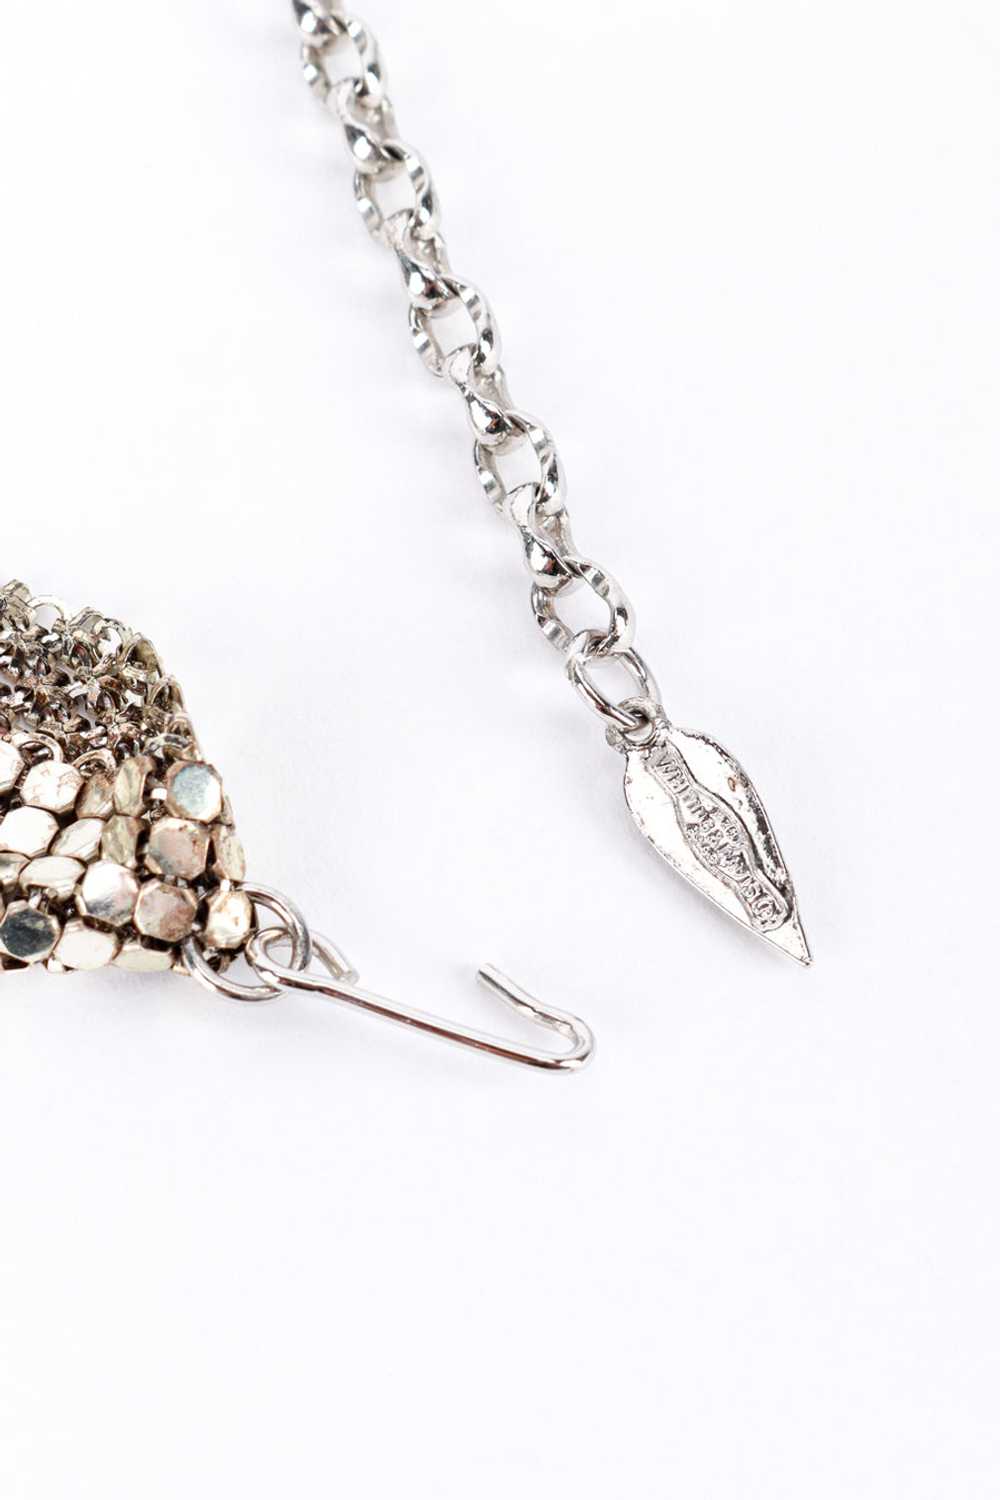 WHITING & DAVIS Silver Chain Mesh Bib Necklace - image 5